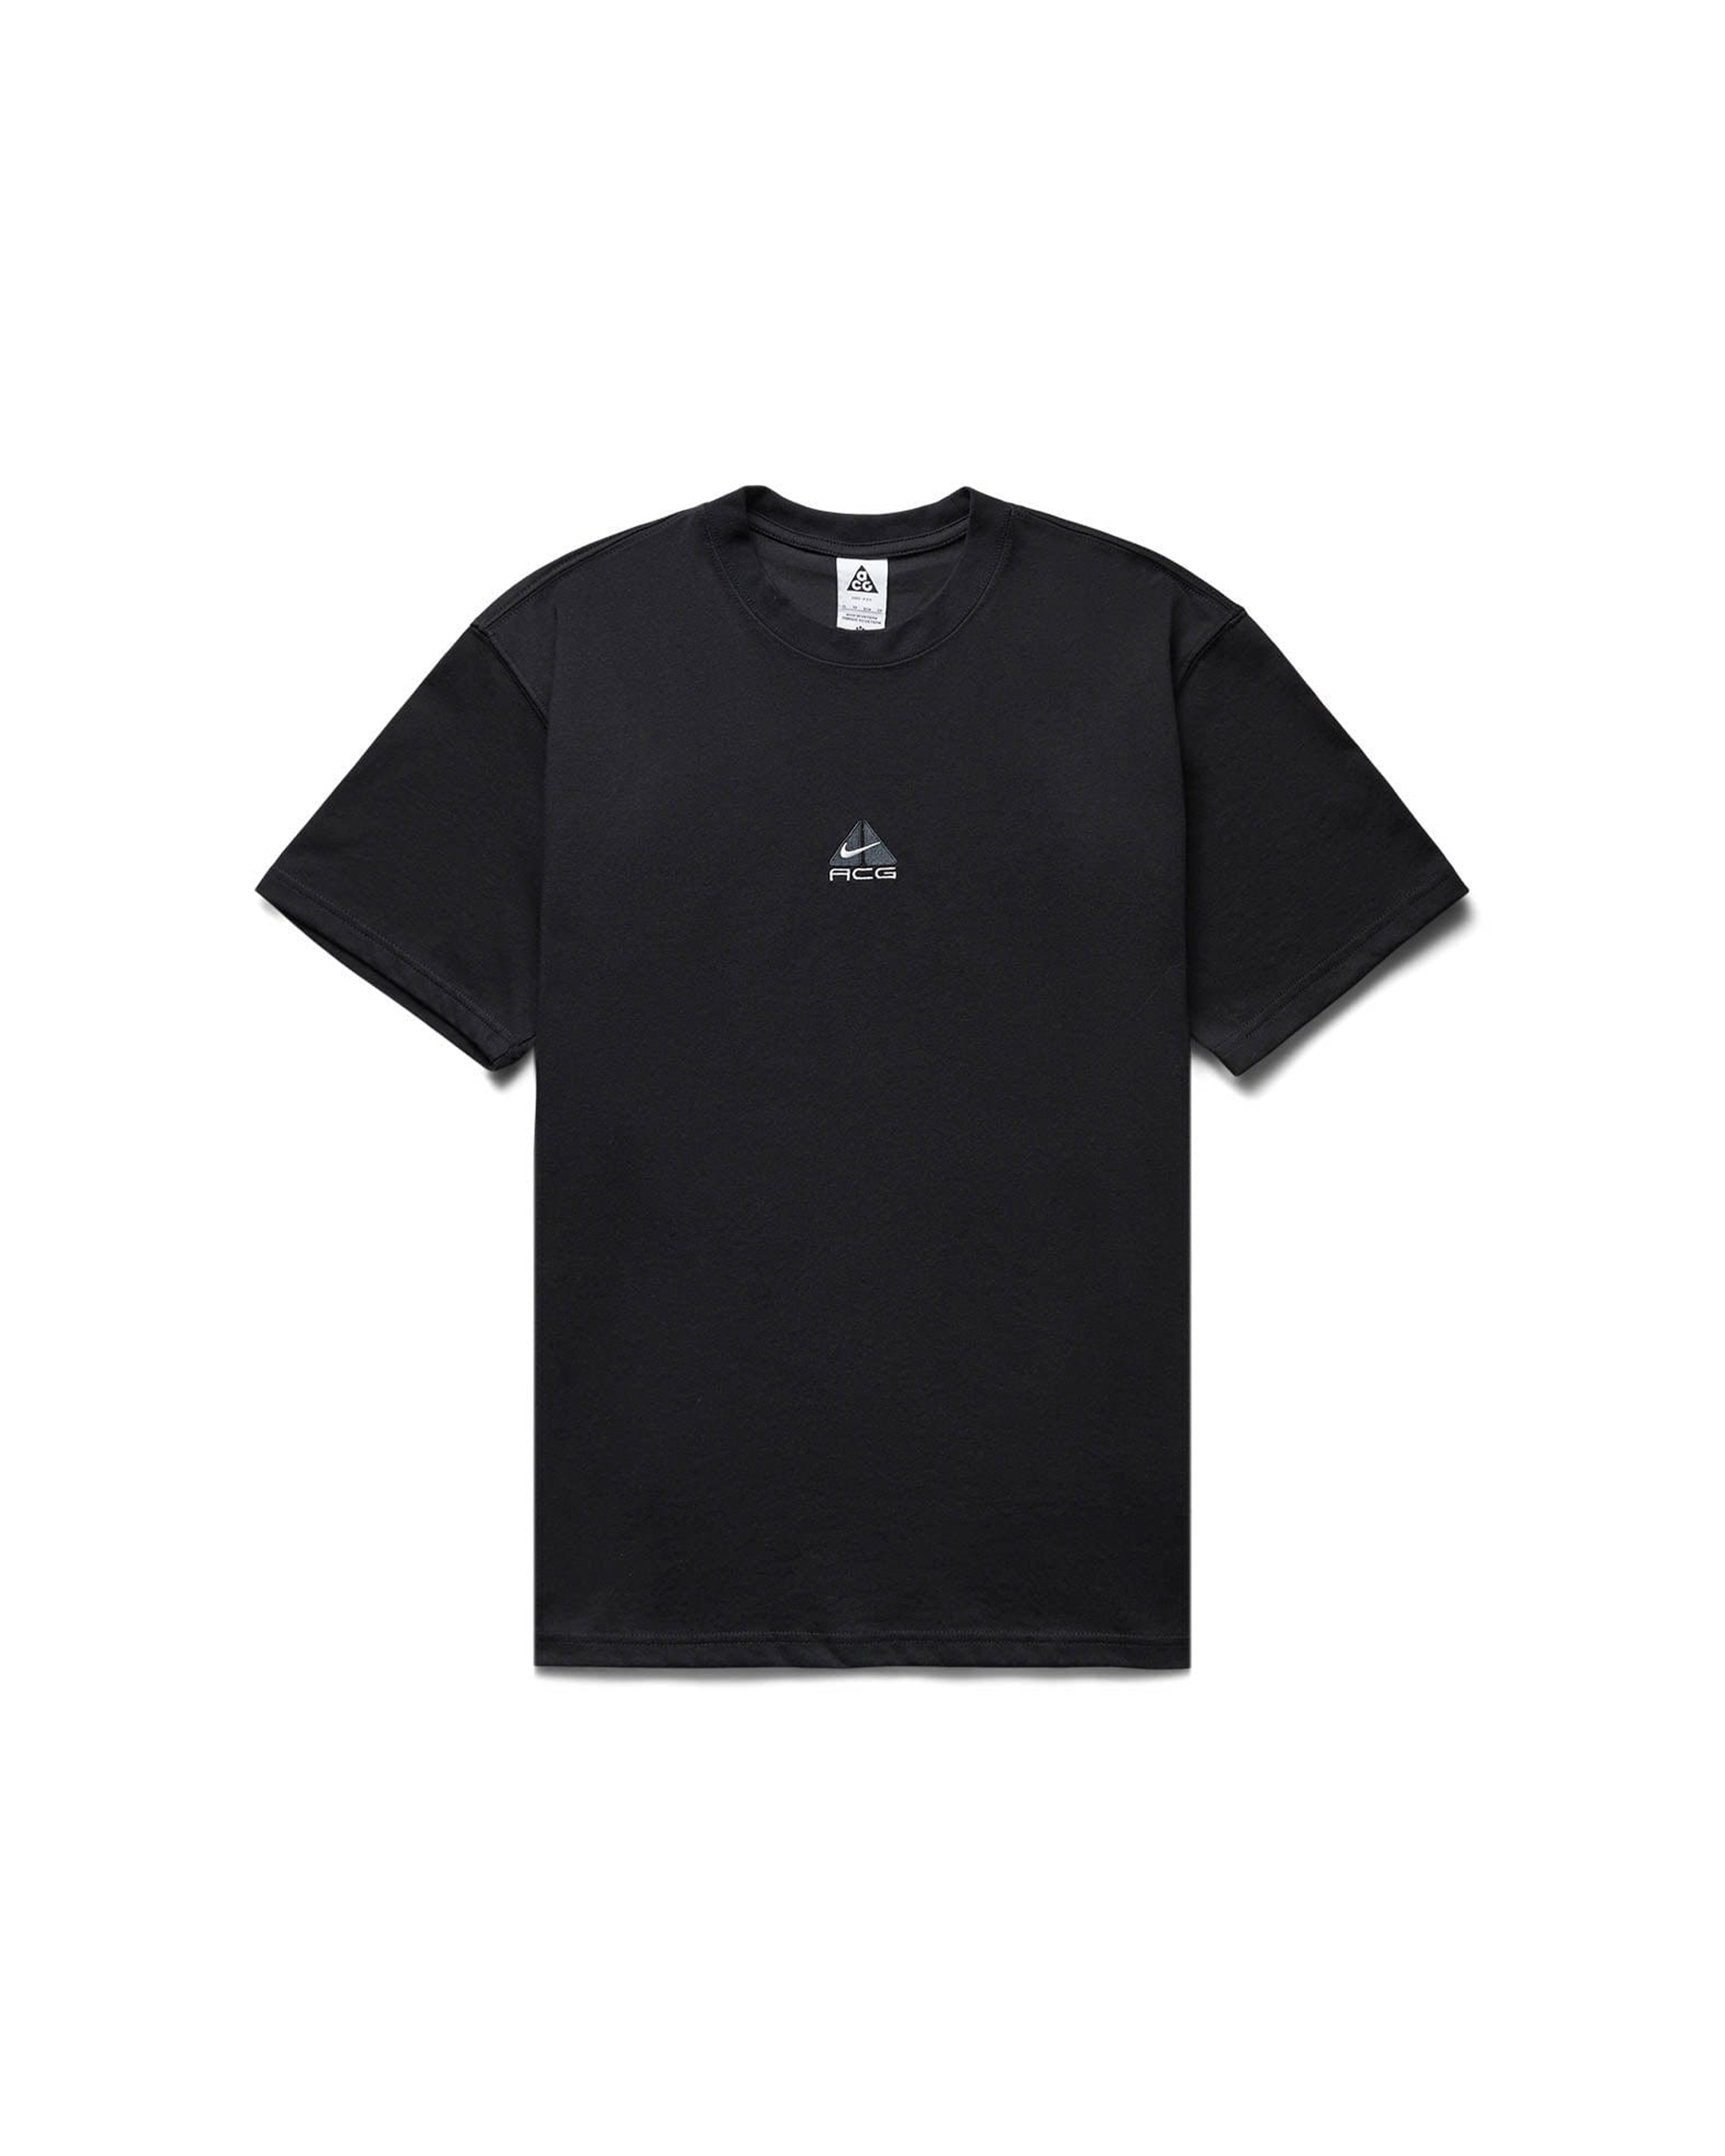 Lung T-shirt - Black / LT Smoke / Summit White